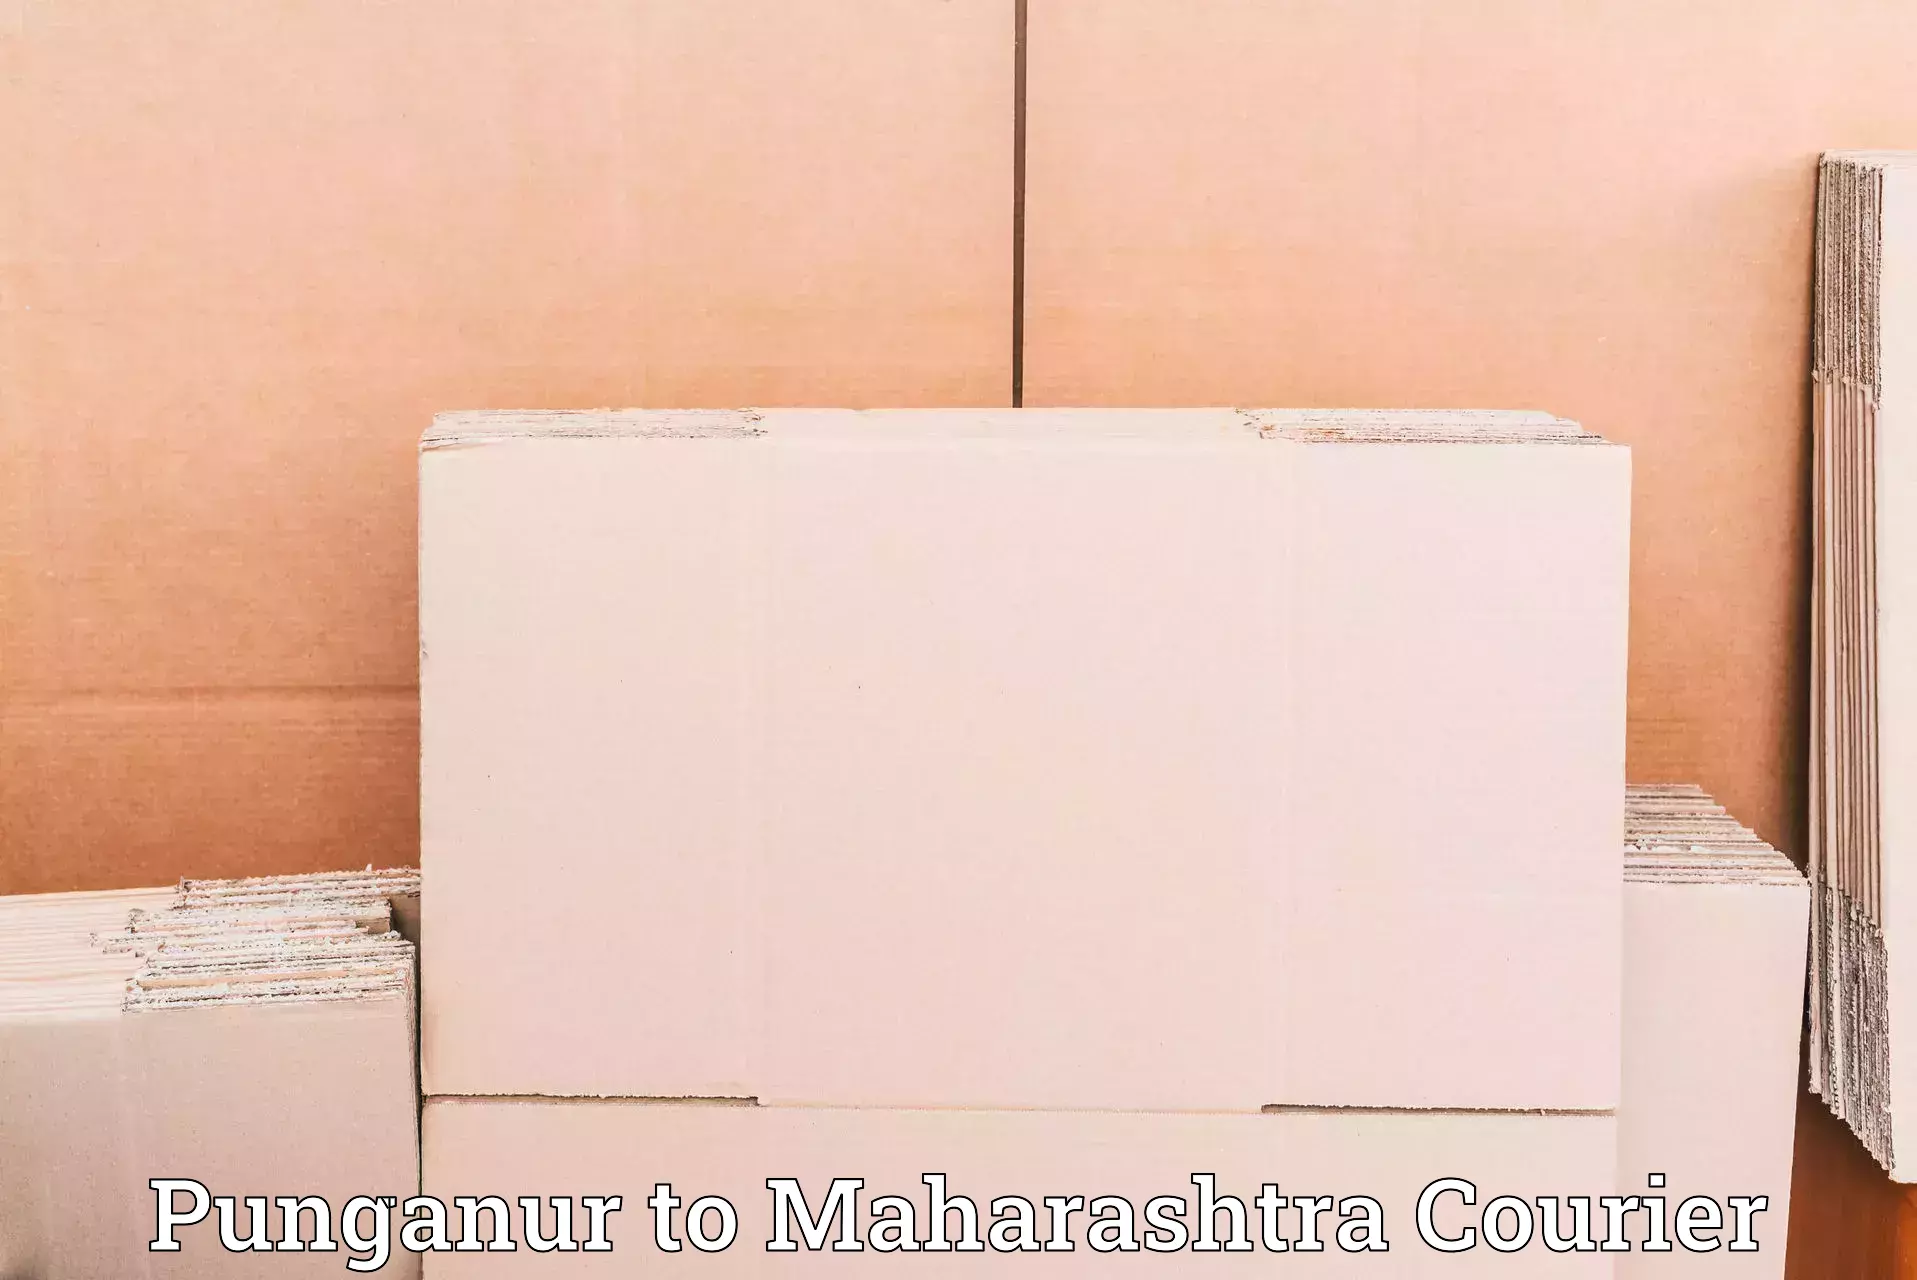 Courier service innovation Punganur to Maharashtra